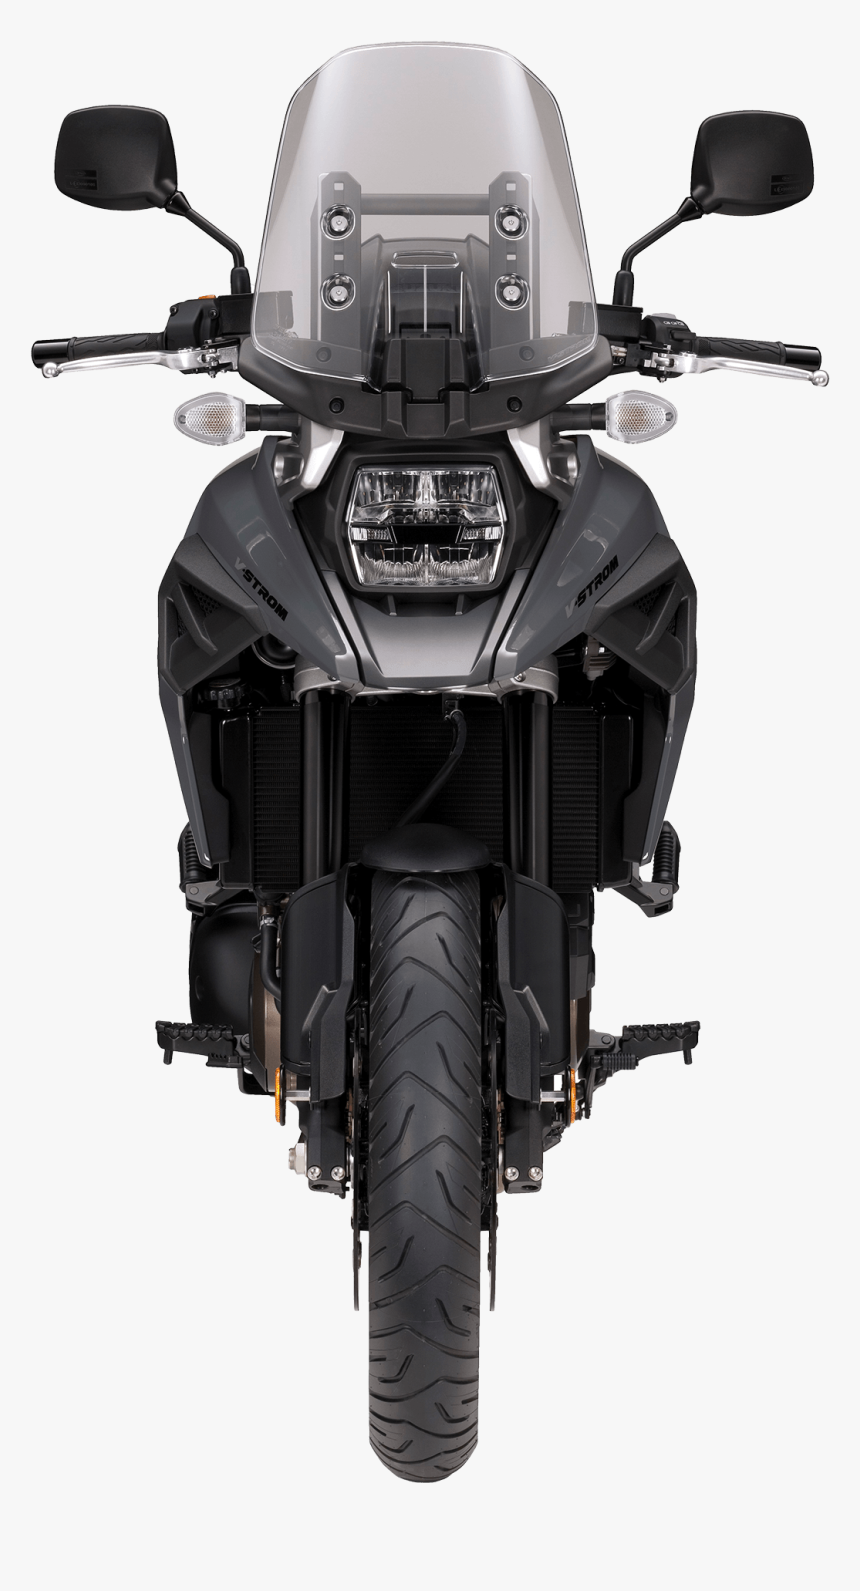 Suzuki V-strom 1050 Black Grey Bike - Vstrom 1050 Xt 2020 Black, HD Png Download, Free Download